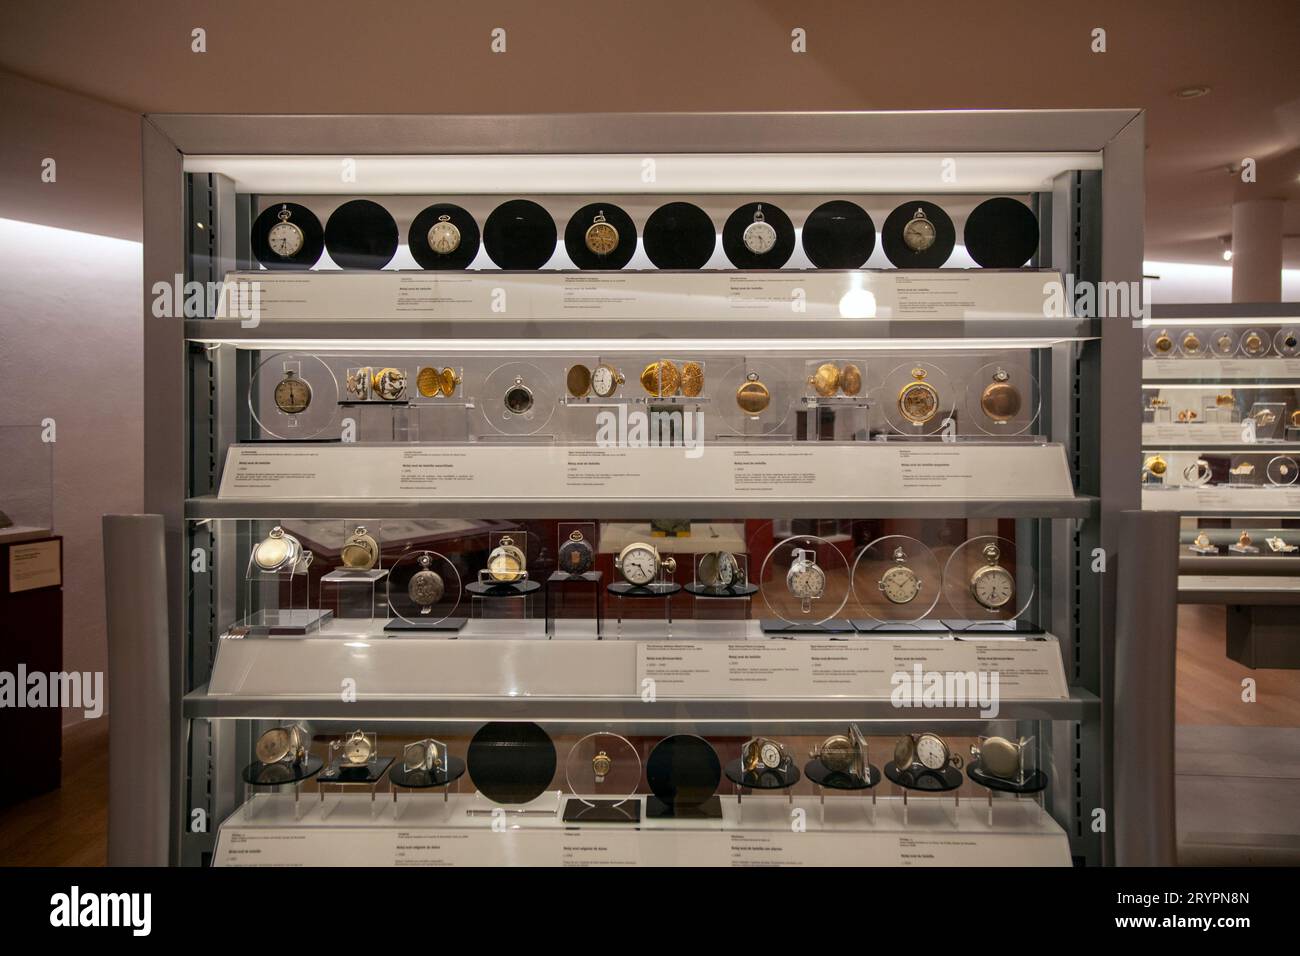 Cabinet of Pocket Watches on Display at Museo Soumaya  - Mexico City, Mexico Stock Photo